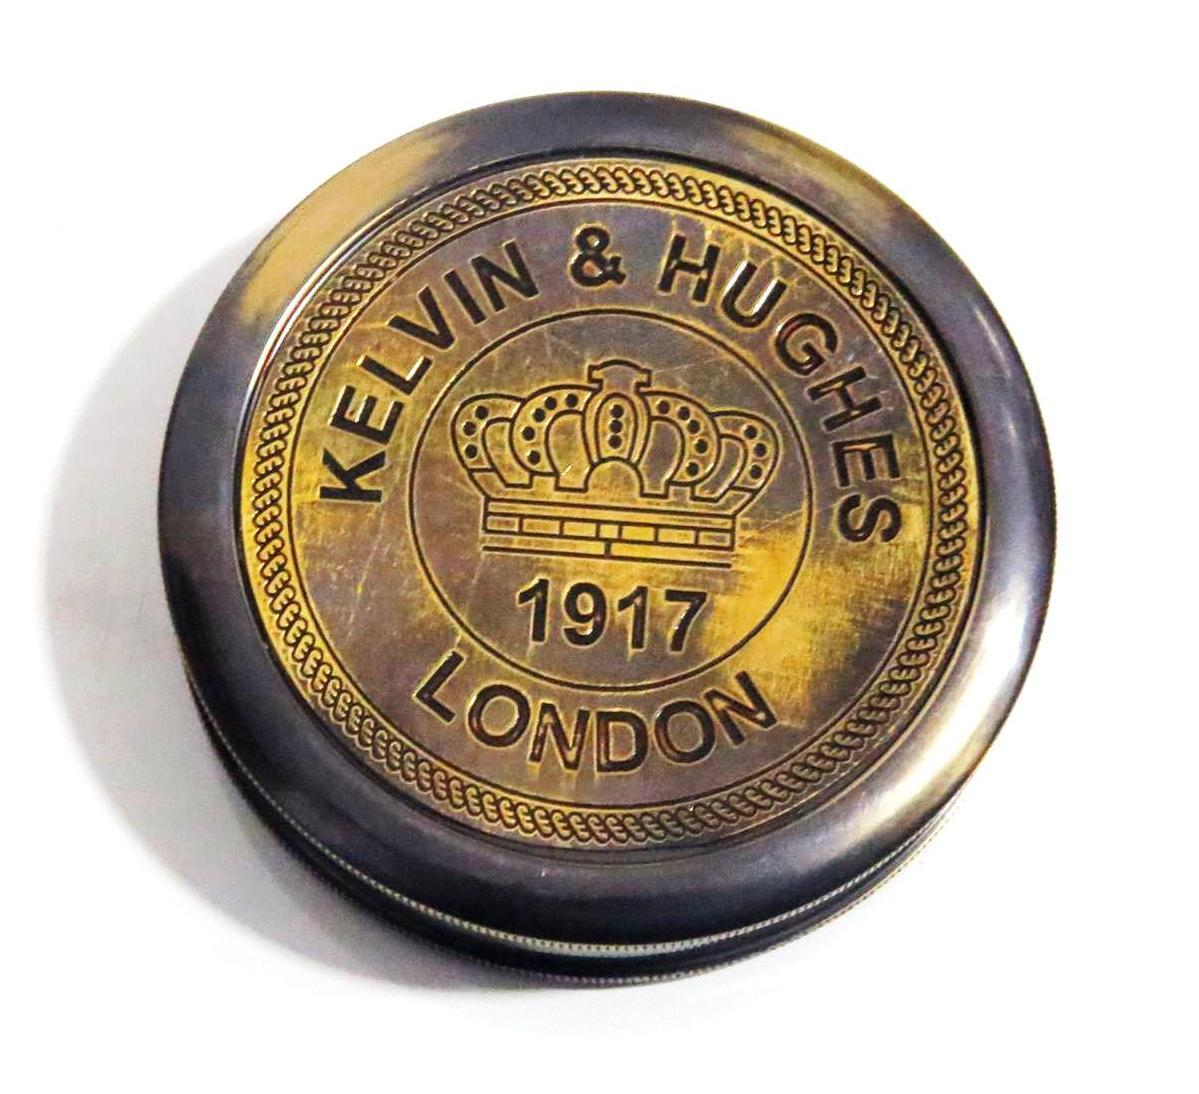 Primary image for NauticalMart 1917 Kelvin & Hughes London Brass Compass